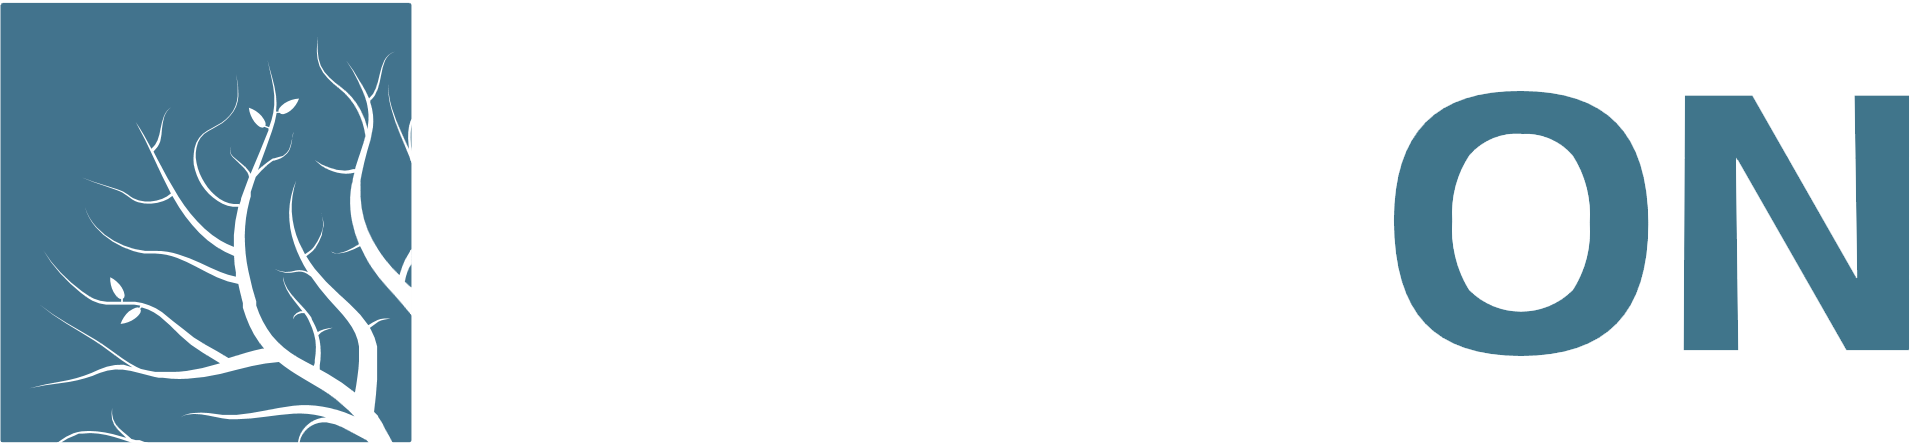 lumion 10 logo png